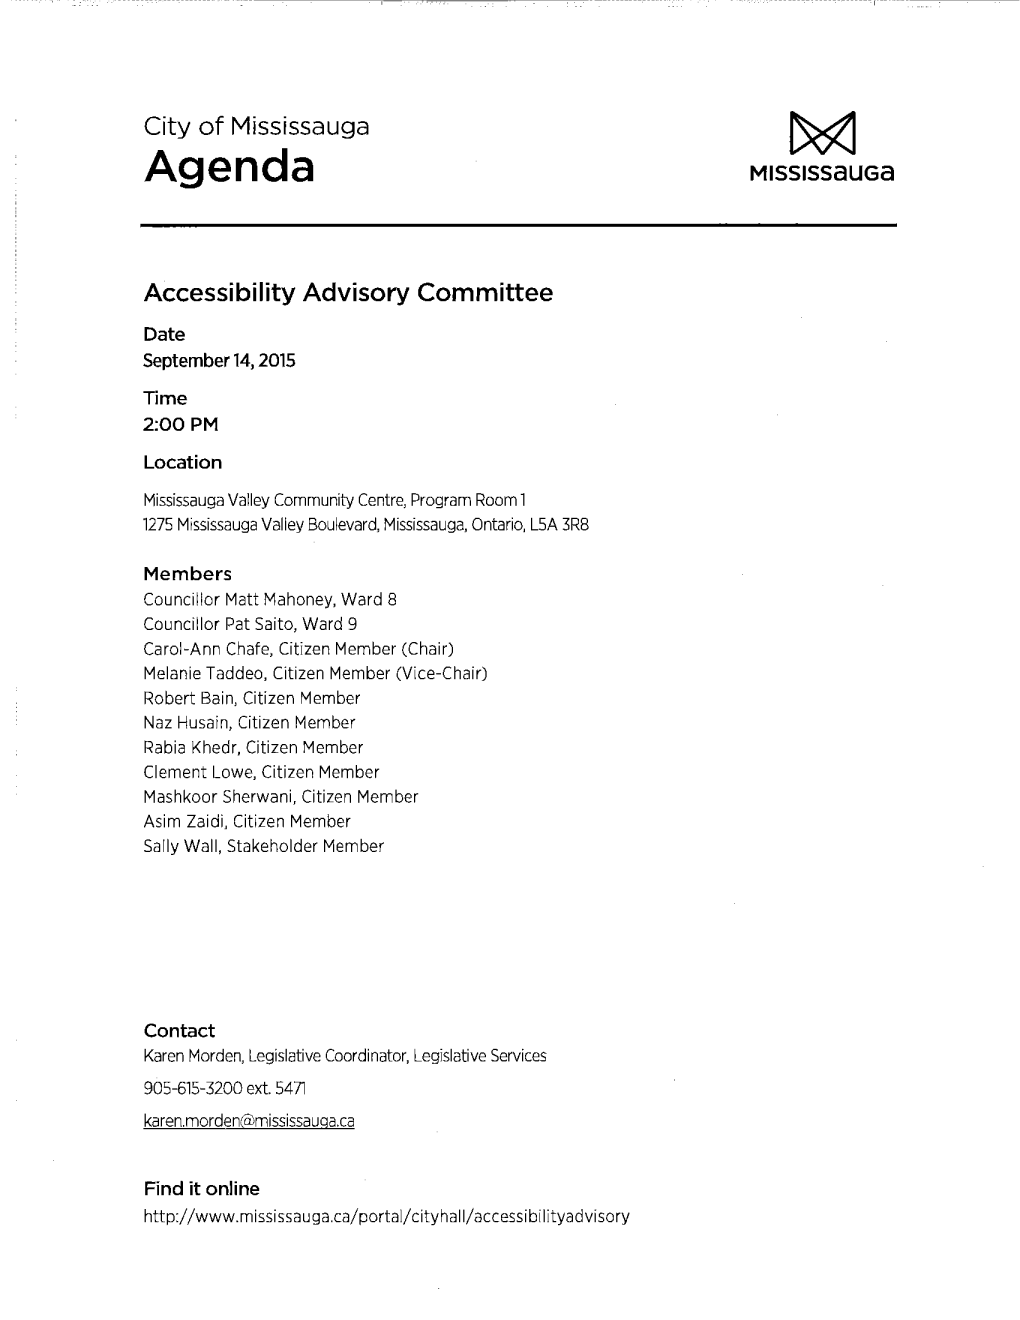 Accessibility Advisory Committee Agenda